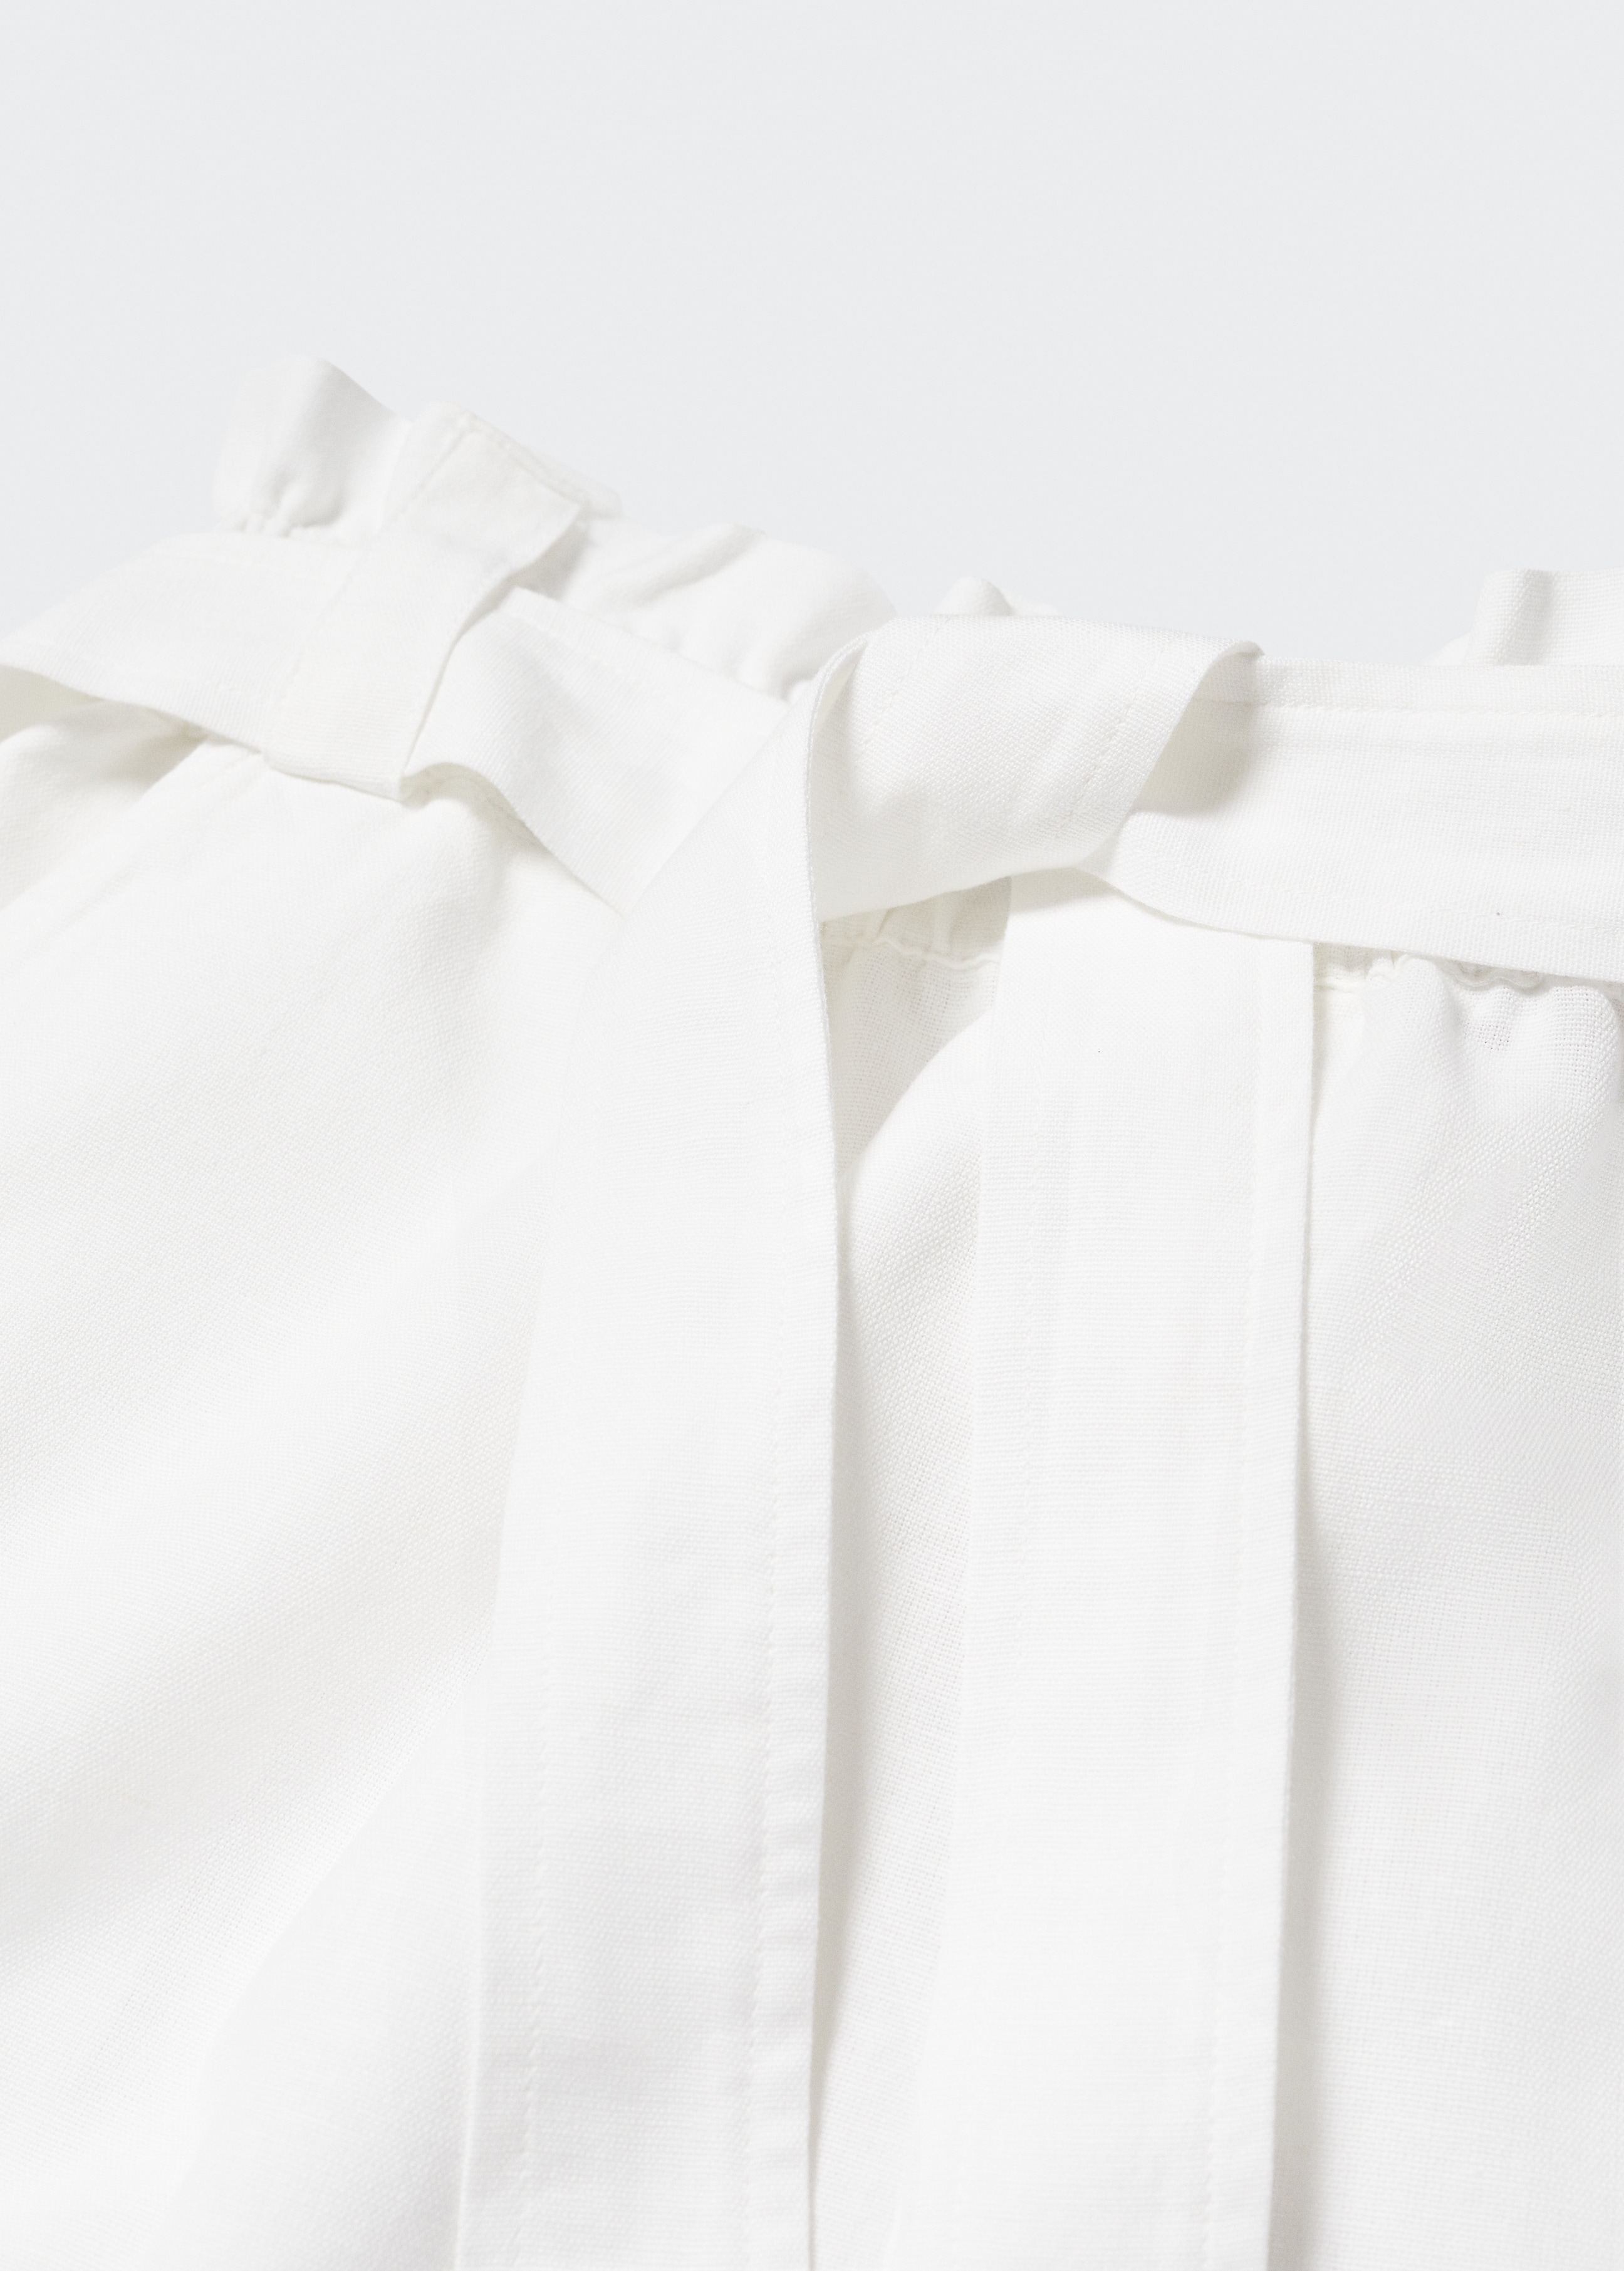 Cotton linen shorts - Details of the article 8